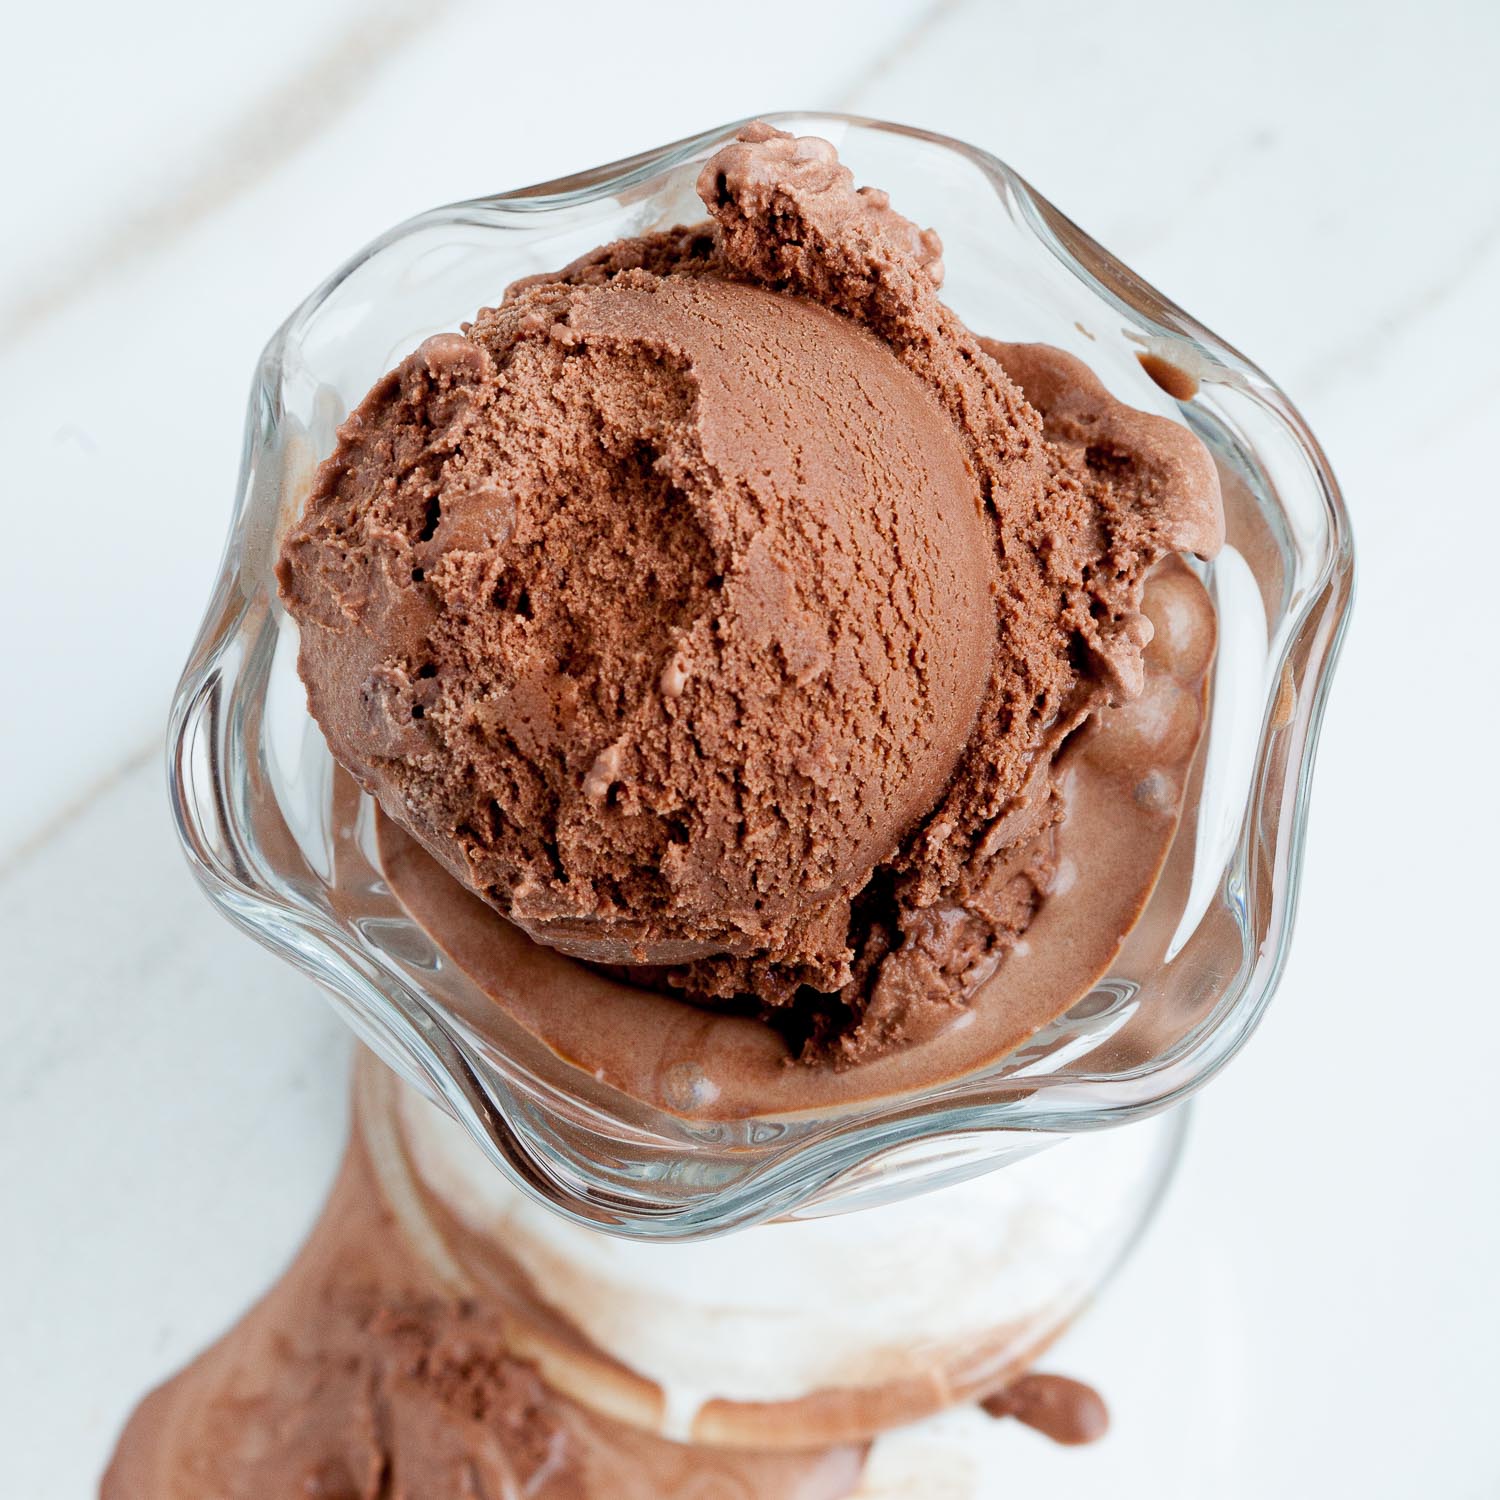 https://www.chewoutloud.com/wp-content/uploads/2022/06/Chocolate-Ice-Cream-in-a-Dish-Square.jpg